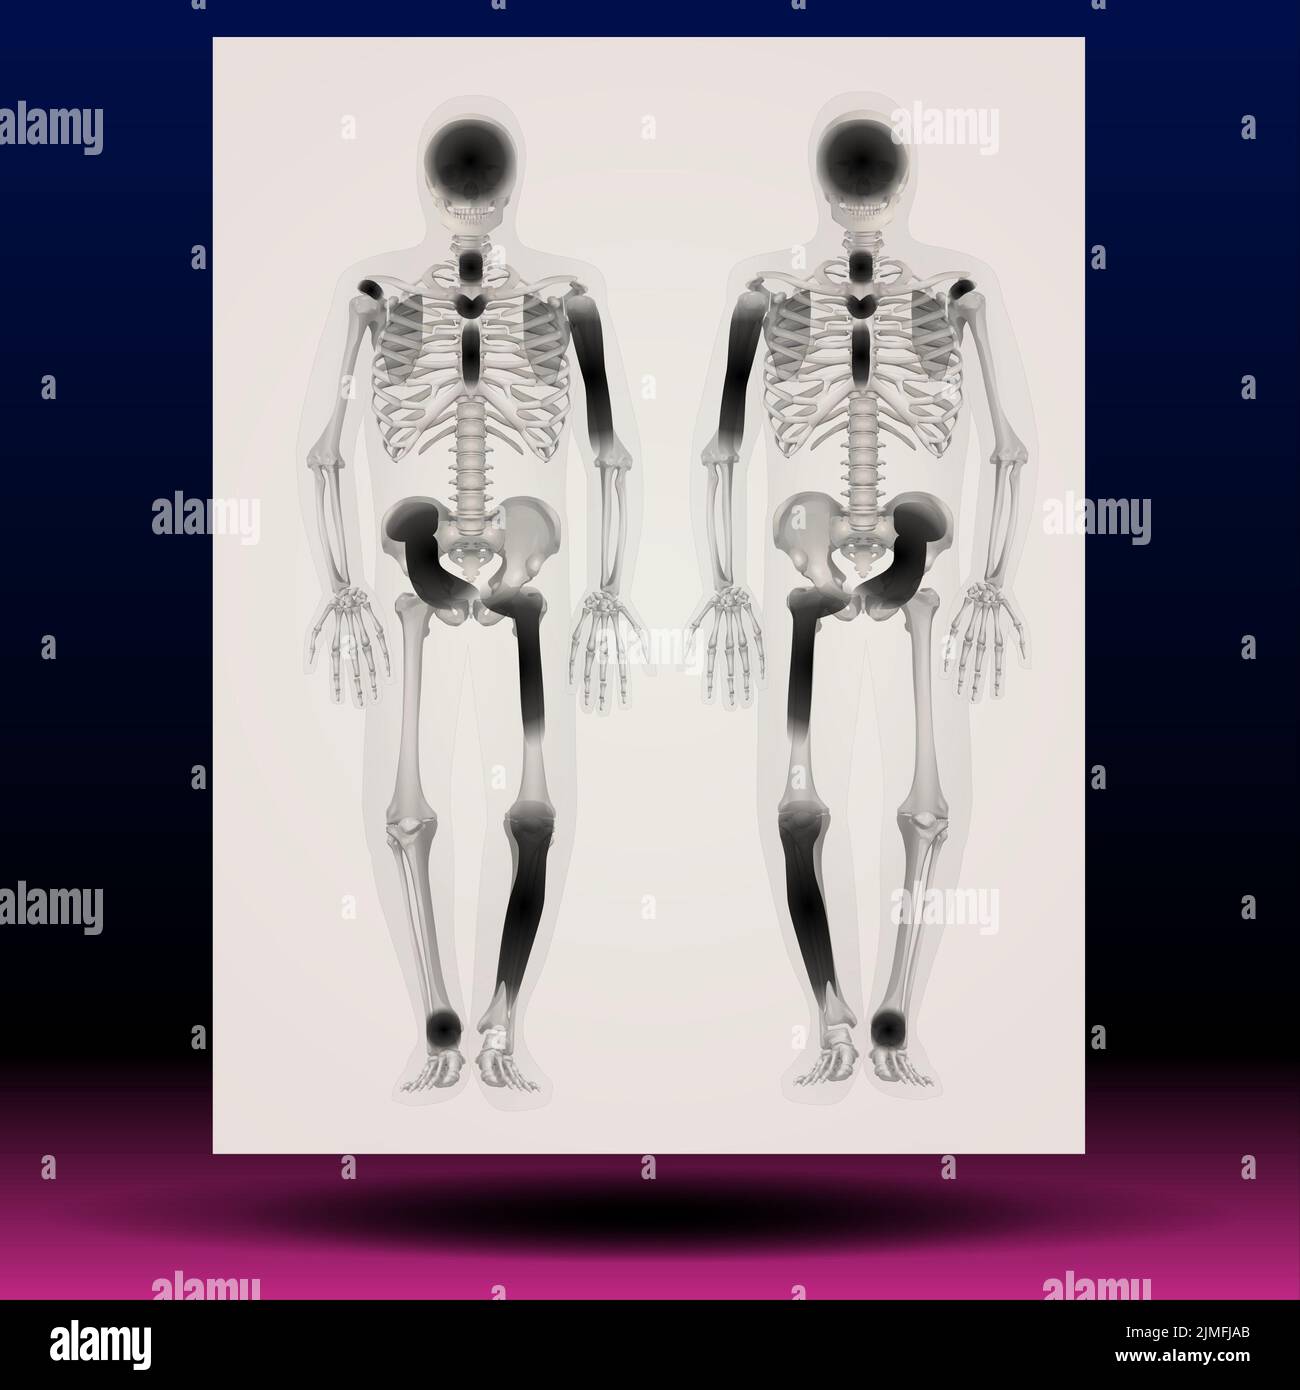 X-ray illustration of a human skeleton Stock Photo